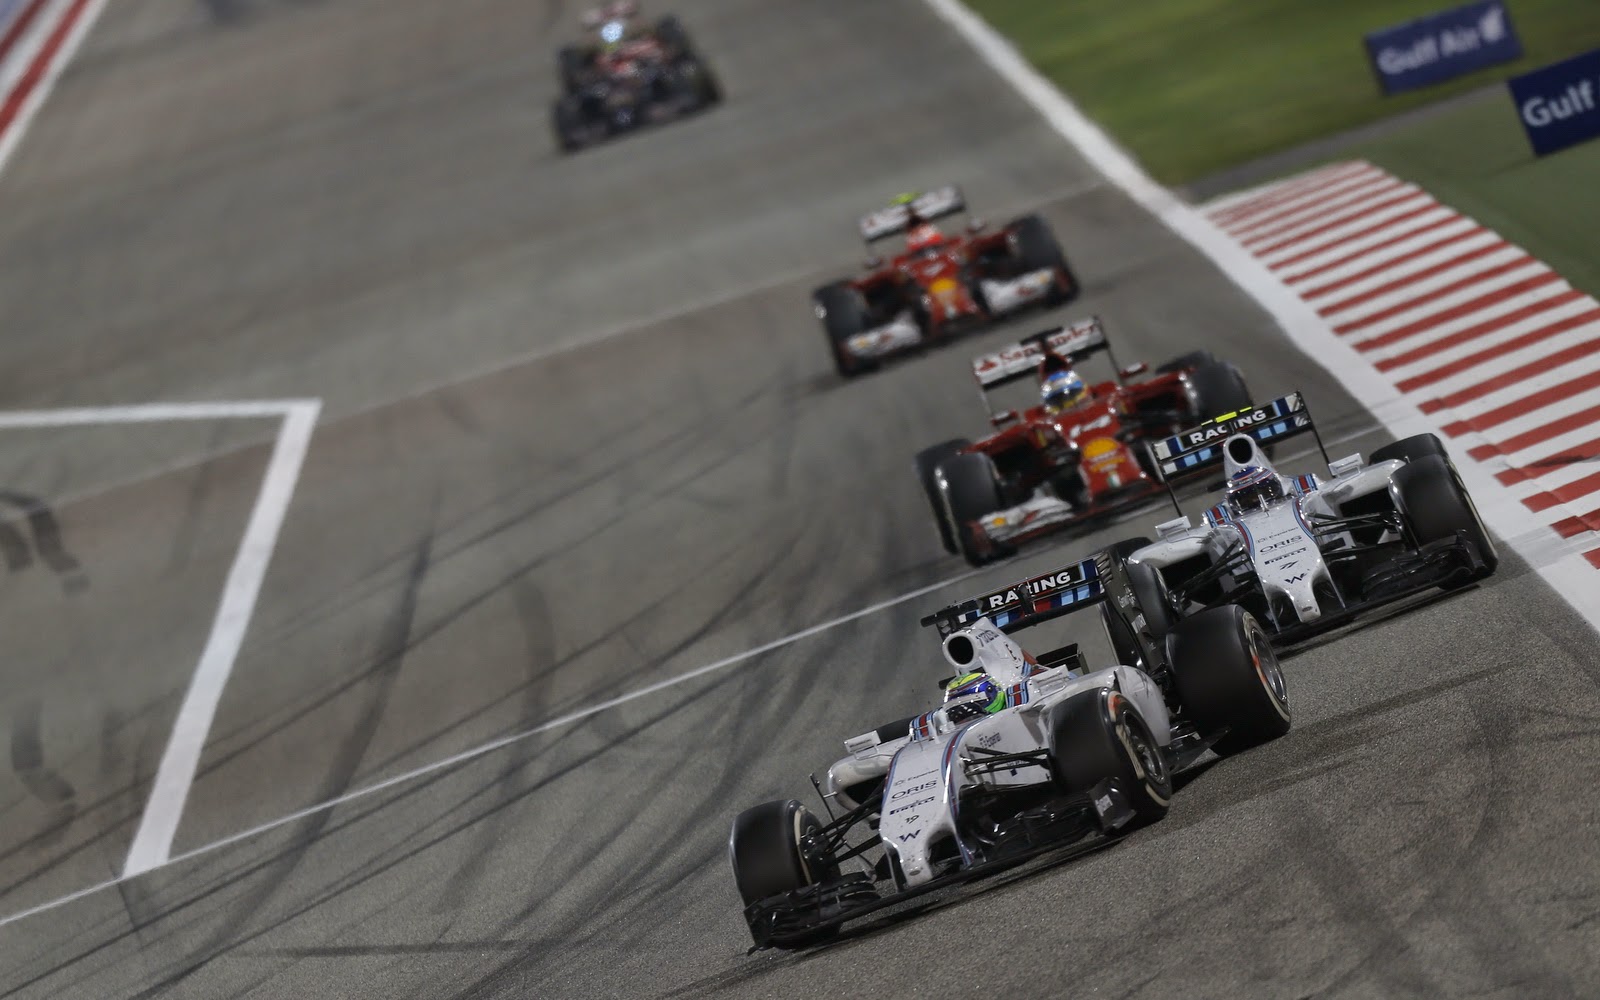 Show race. Вильямс 2014 ф1. Williams f1 2014. F1 2014 photo.